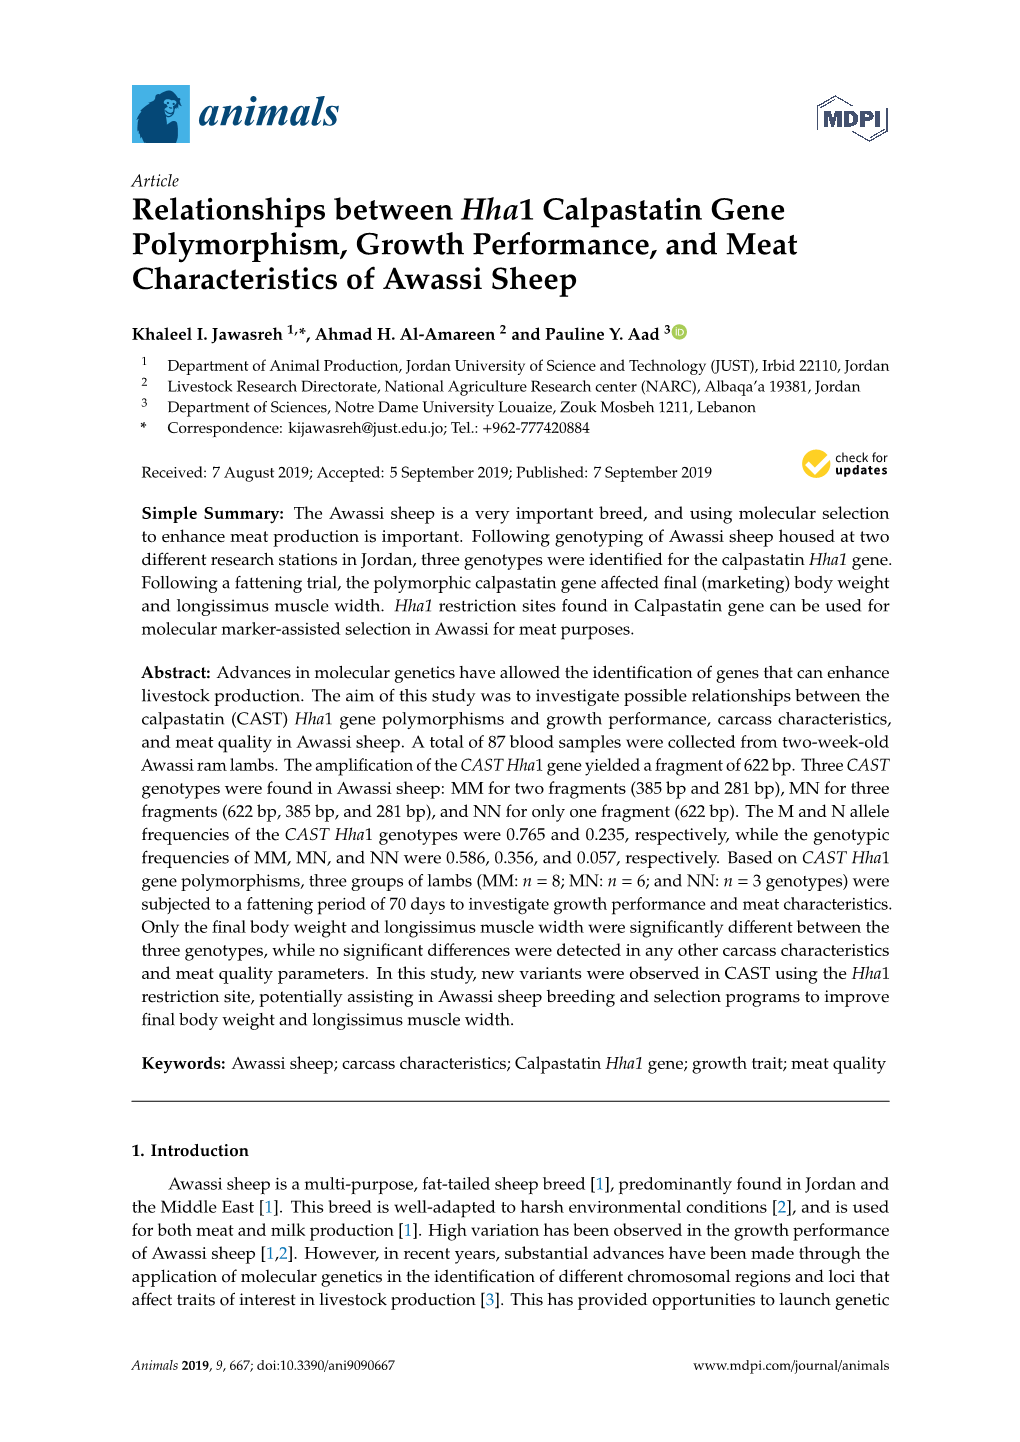 Relationships Between Hha1 Calpastatin Gene Polymorphism, Growth Performance, and Meat Characteristics of Awassi Sheep